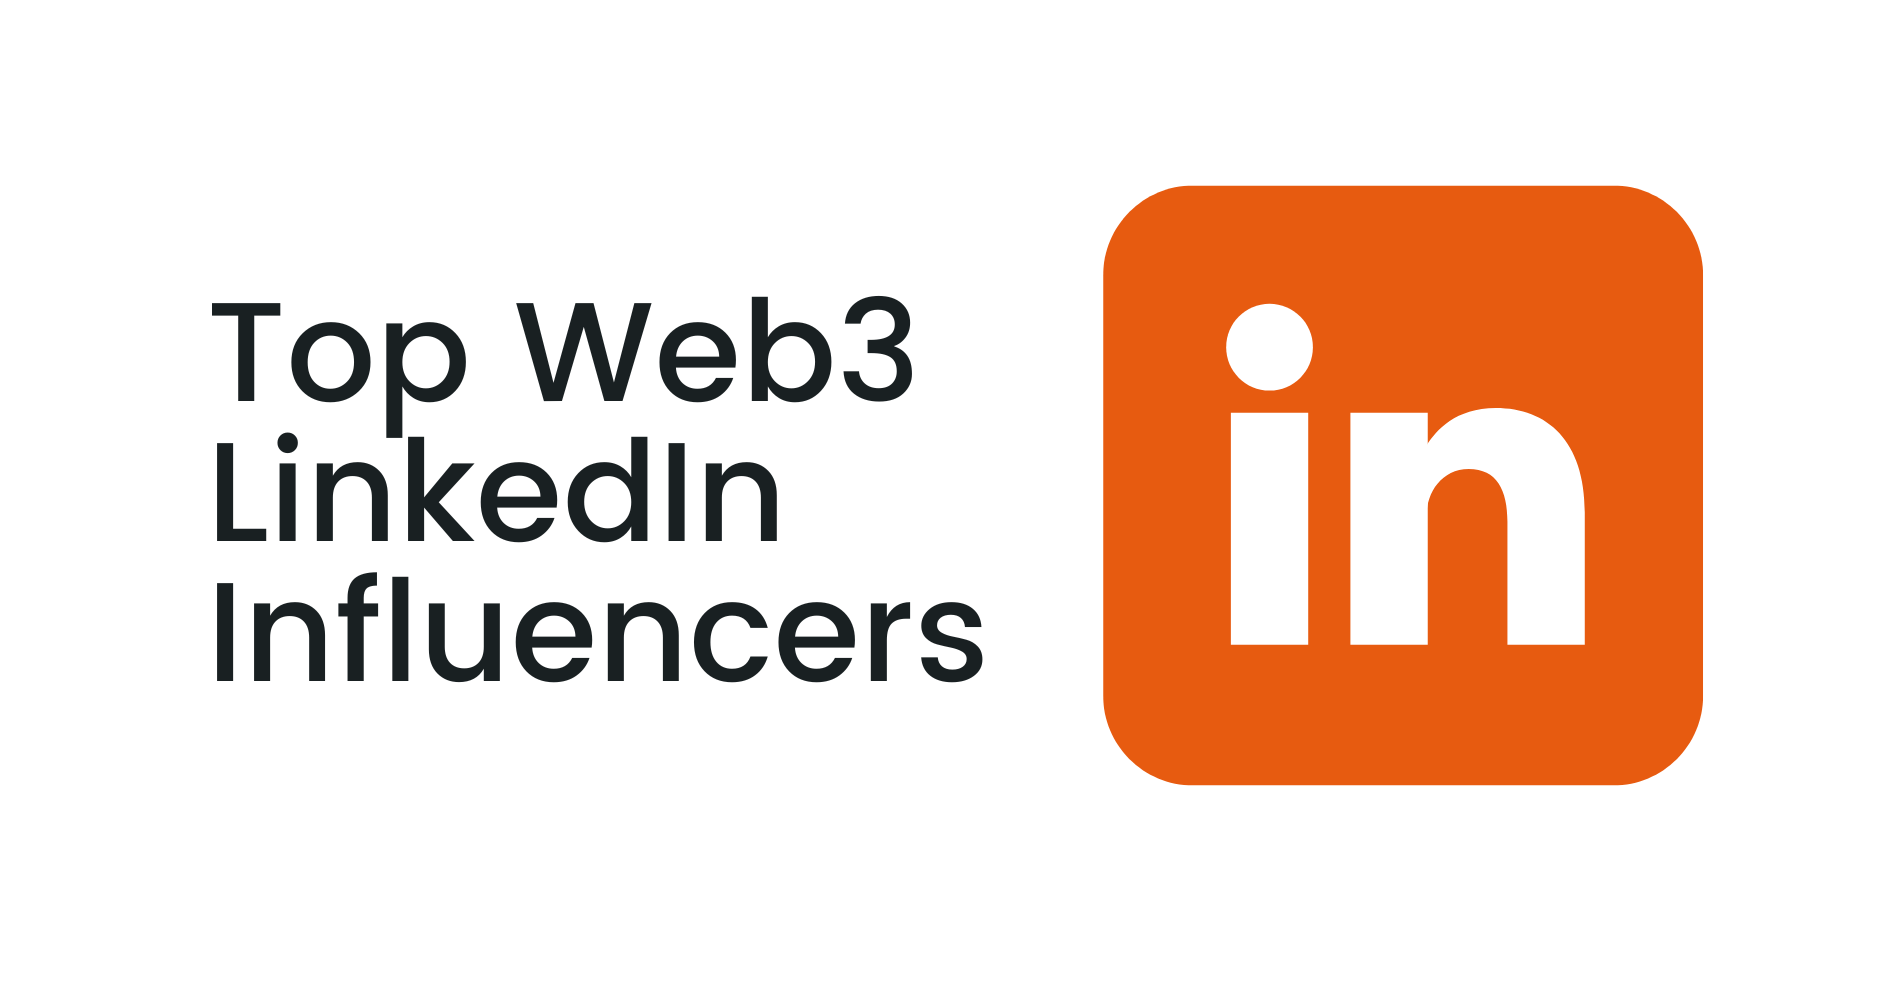 Top Web3 LinkedIn Influencers